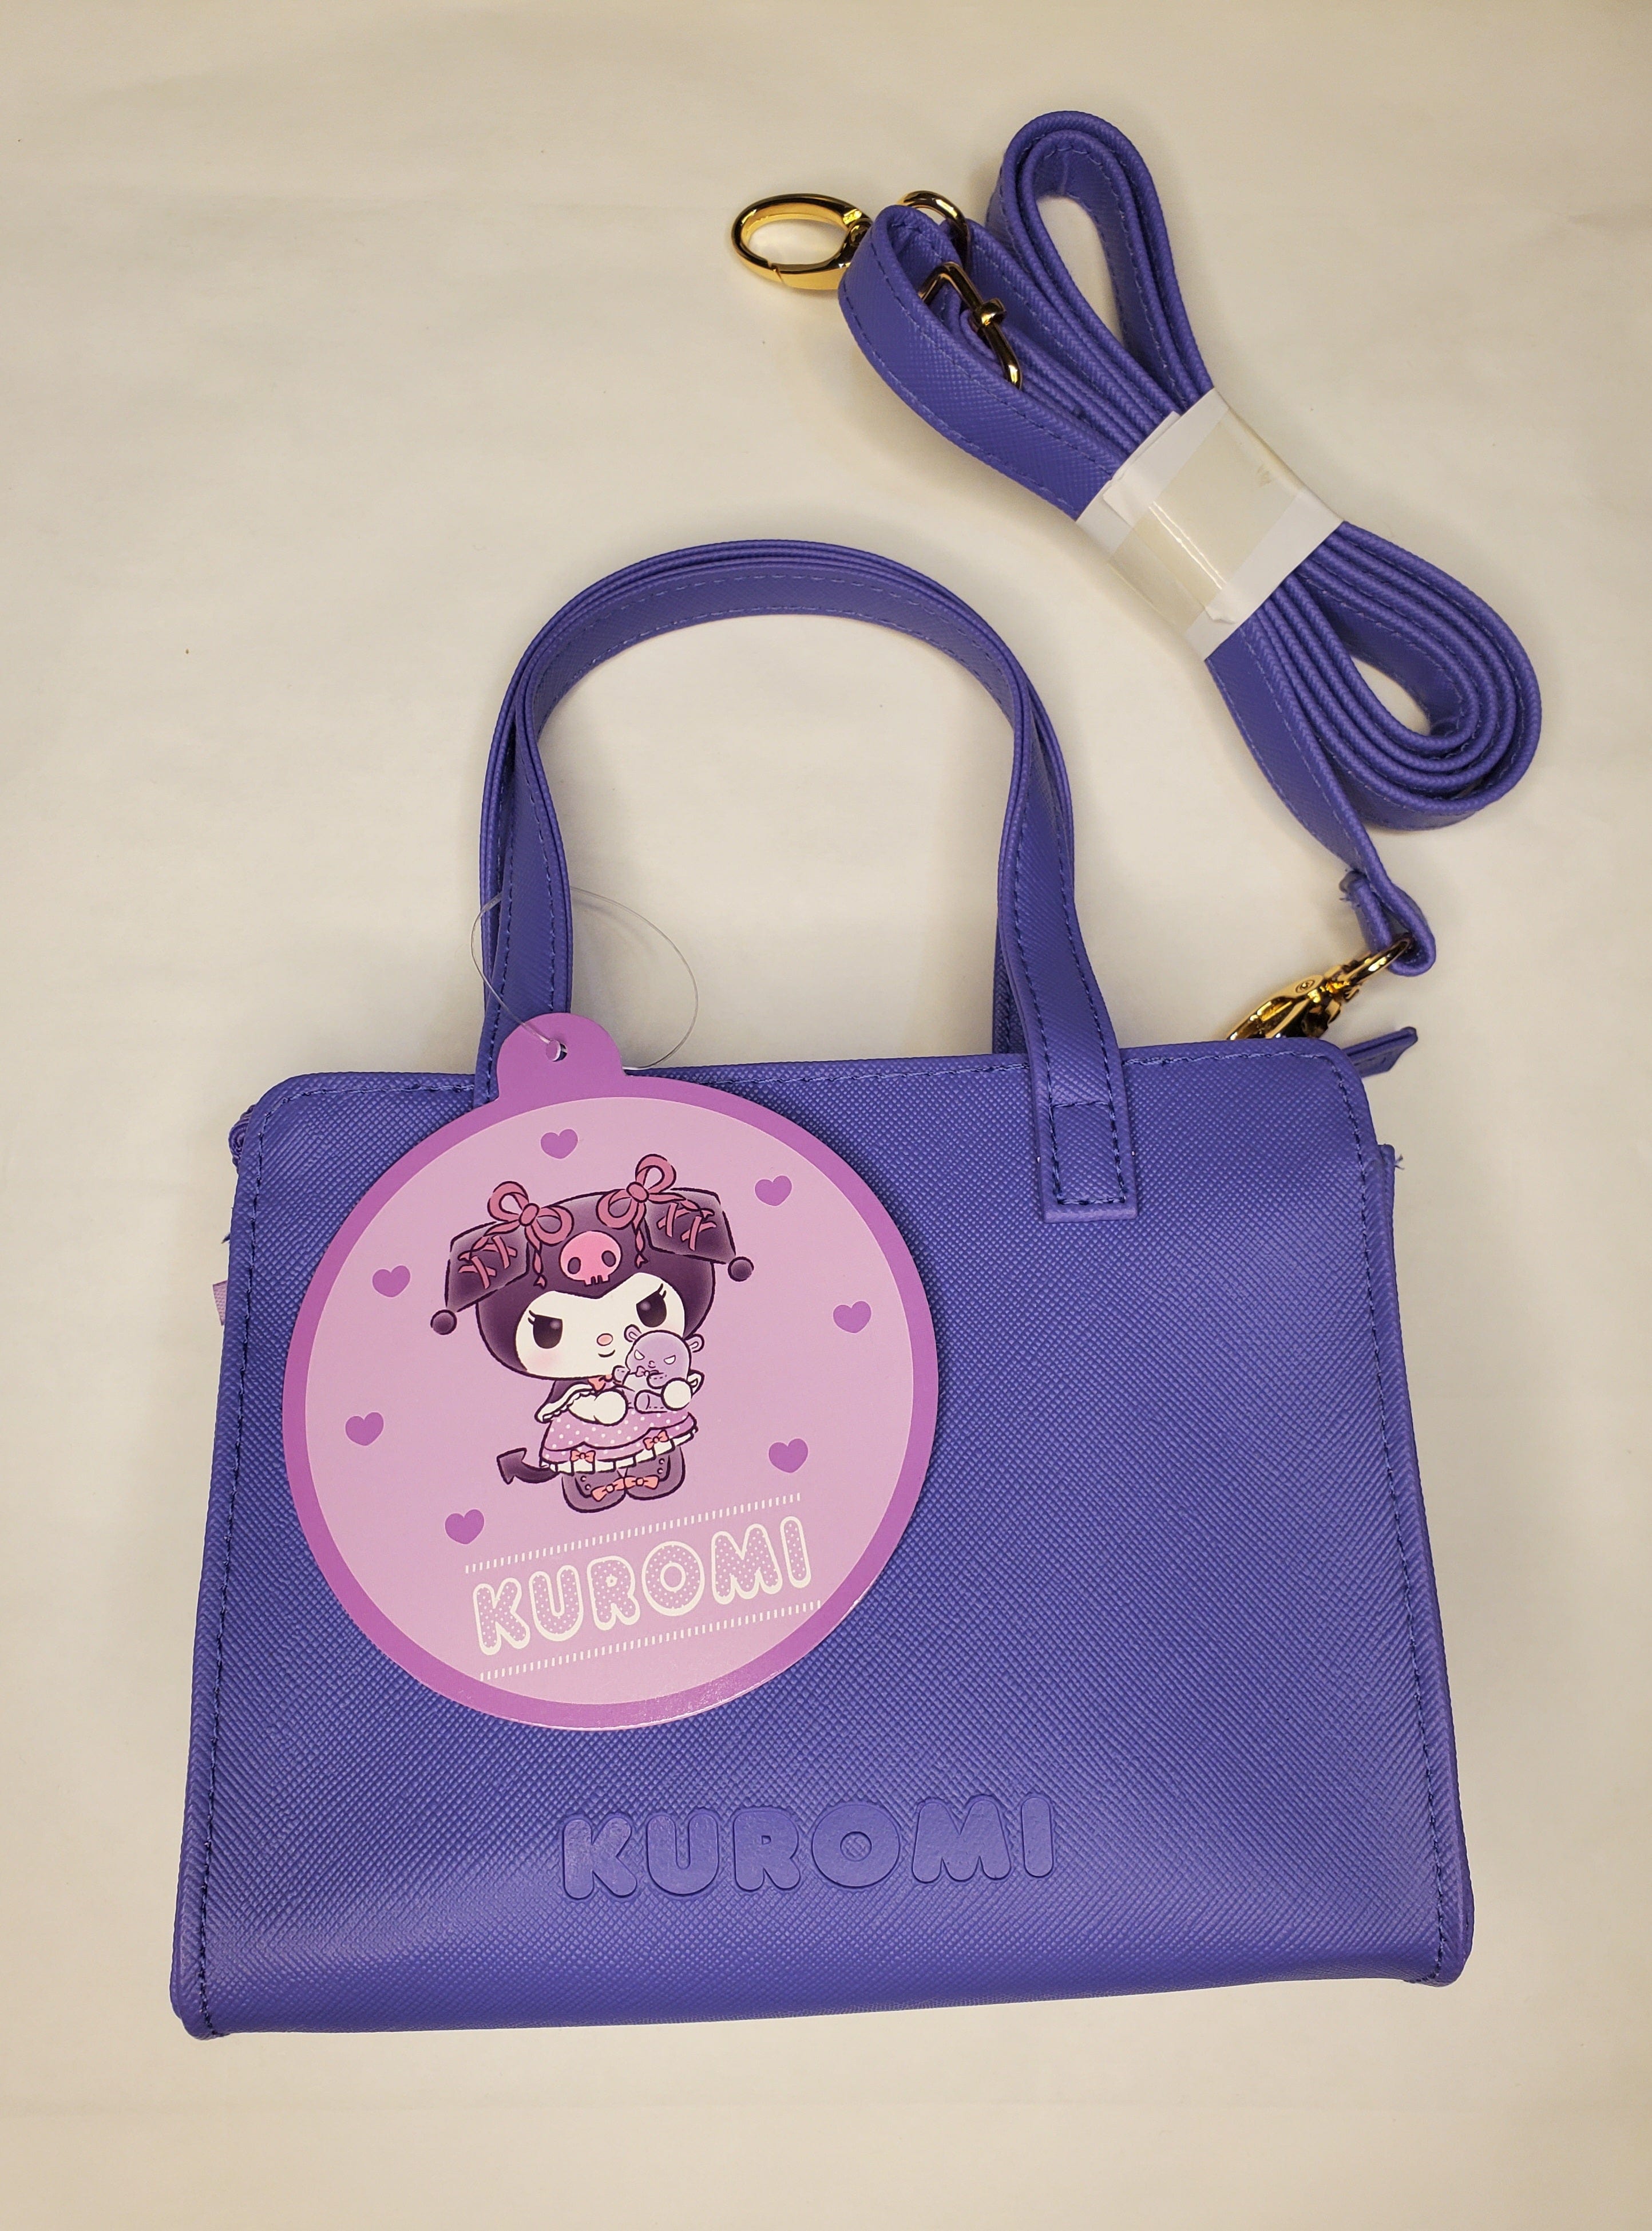 Enesco Sanrio Original Kuromi Handbags with Shoulder Straps Kawaii Gifts